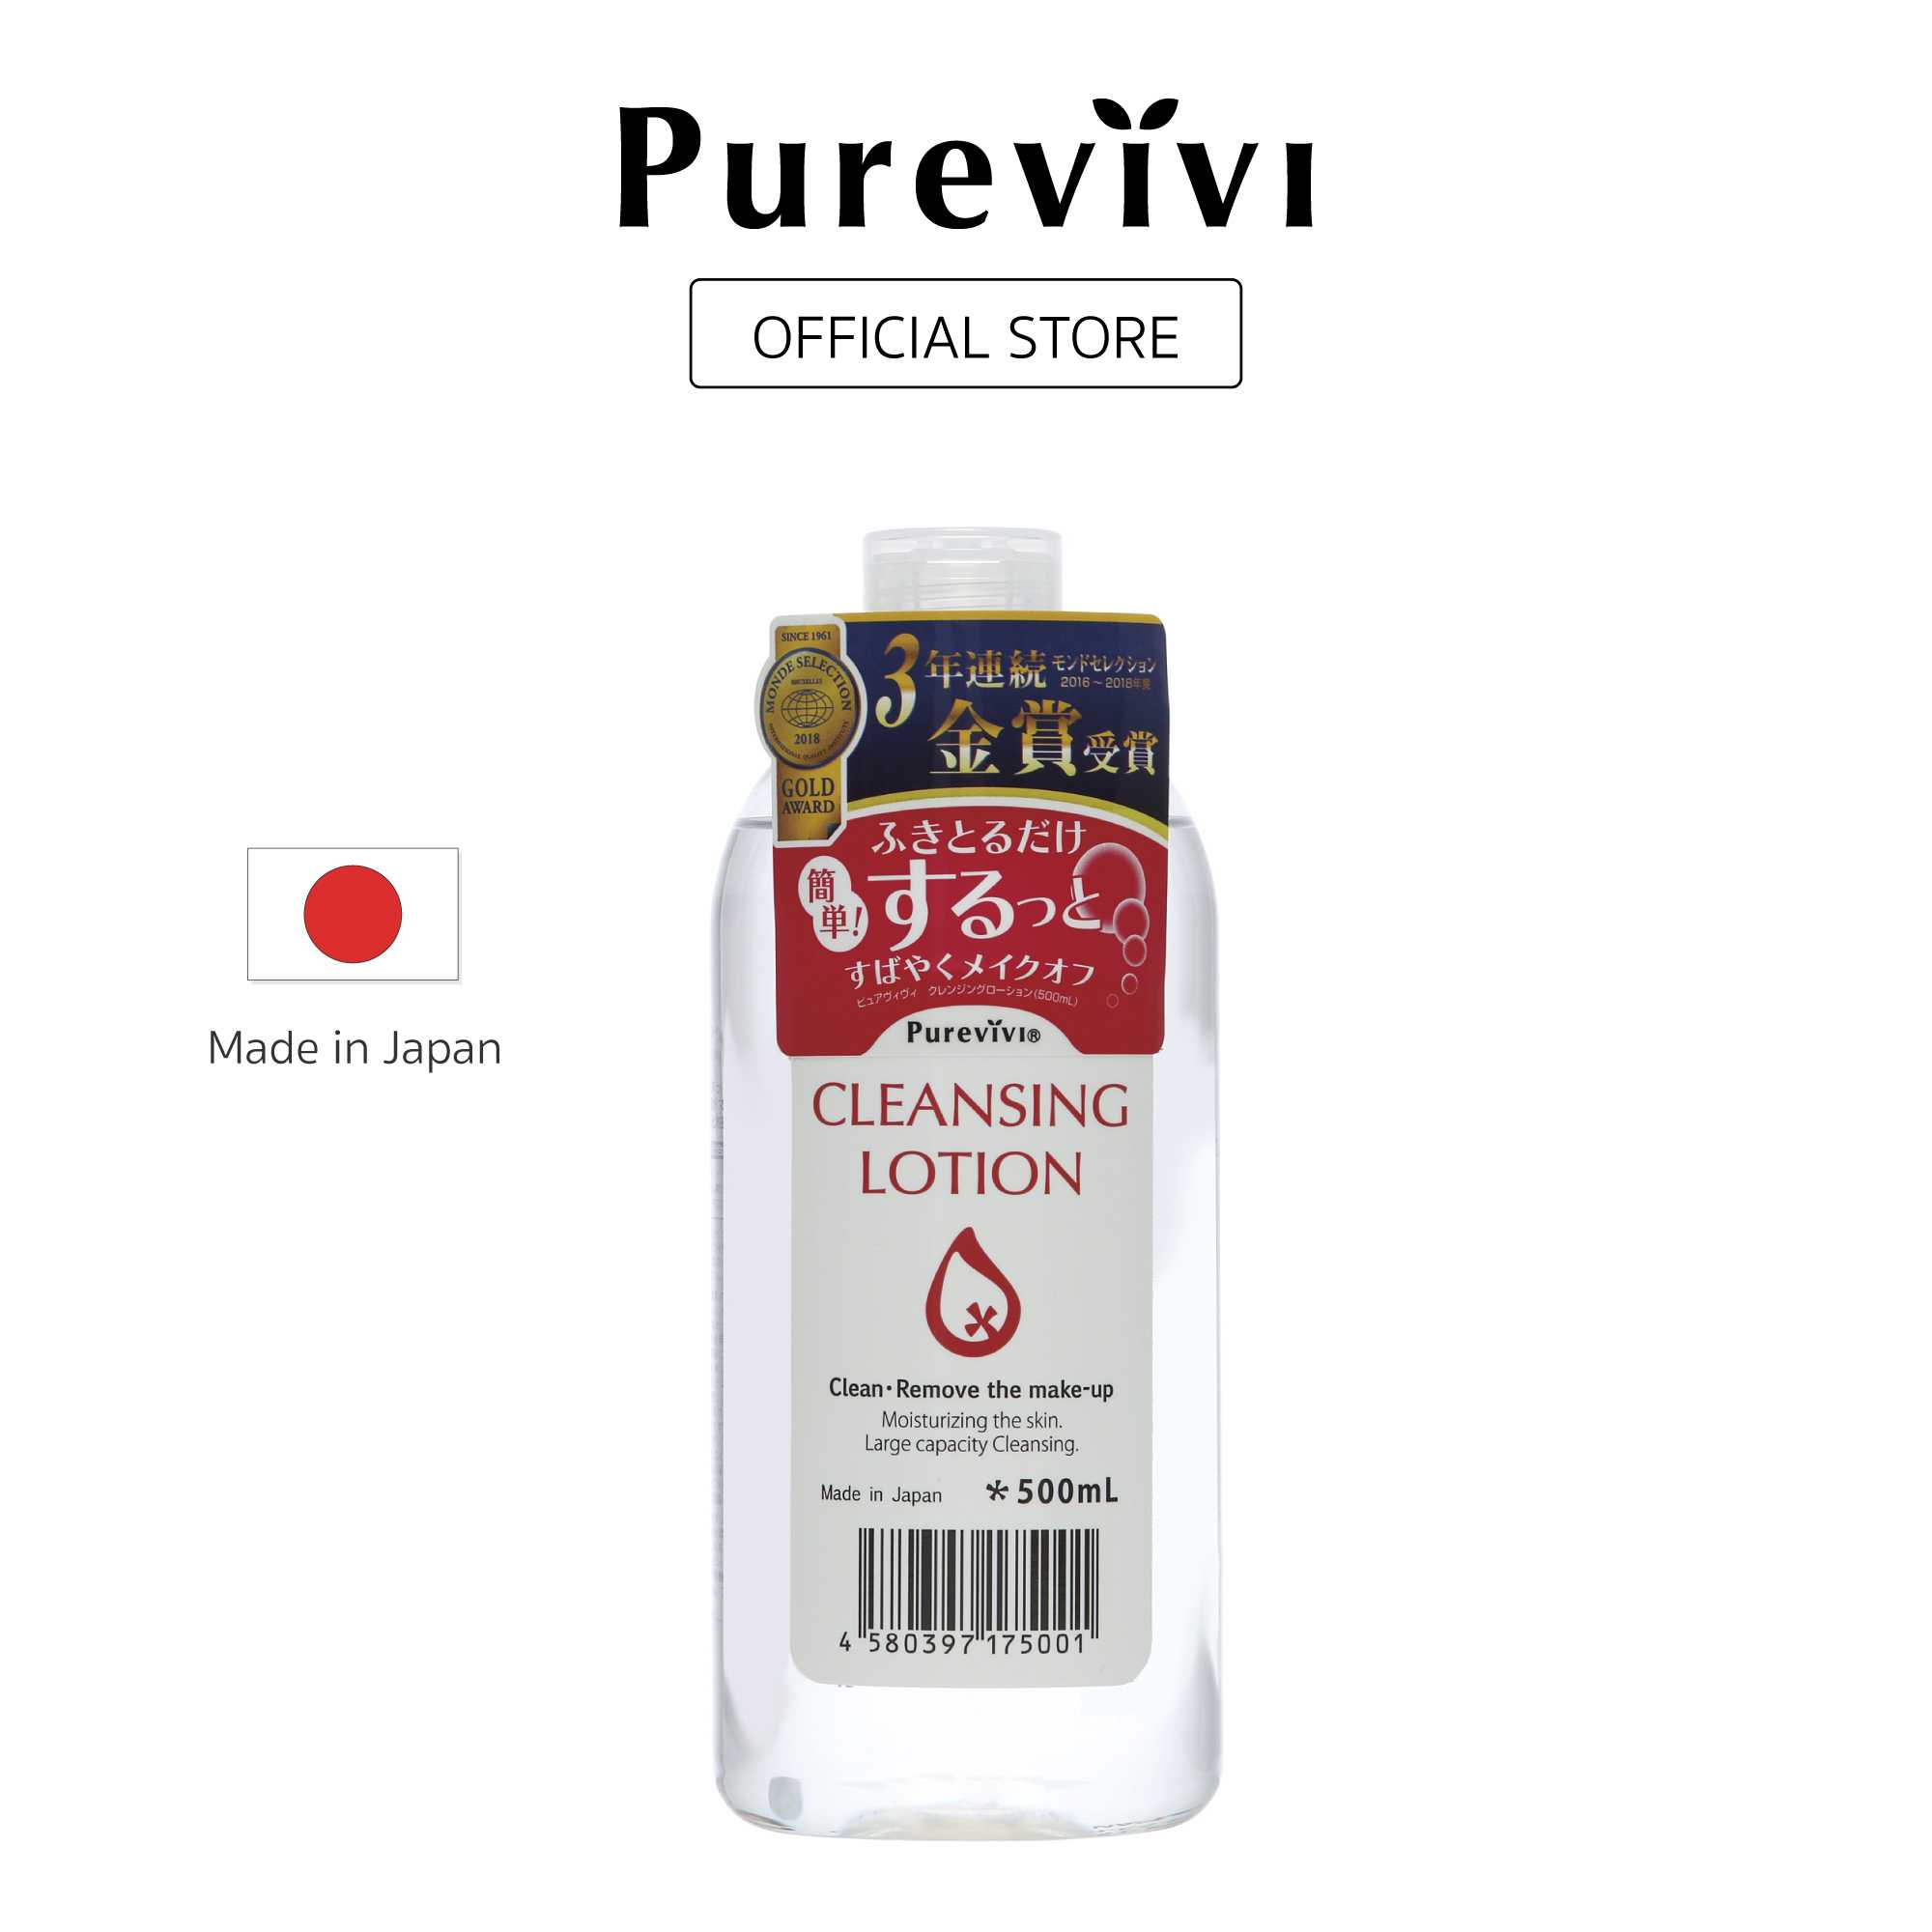 Purevivi Cleansing Lotion (500 ml)